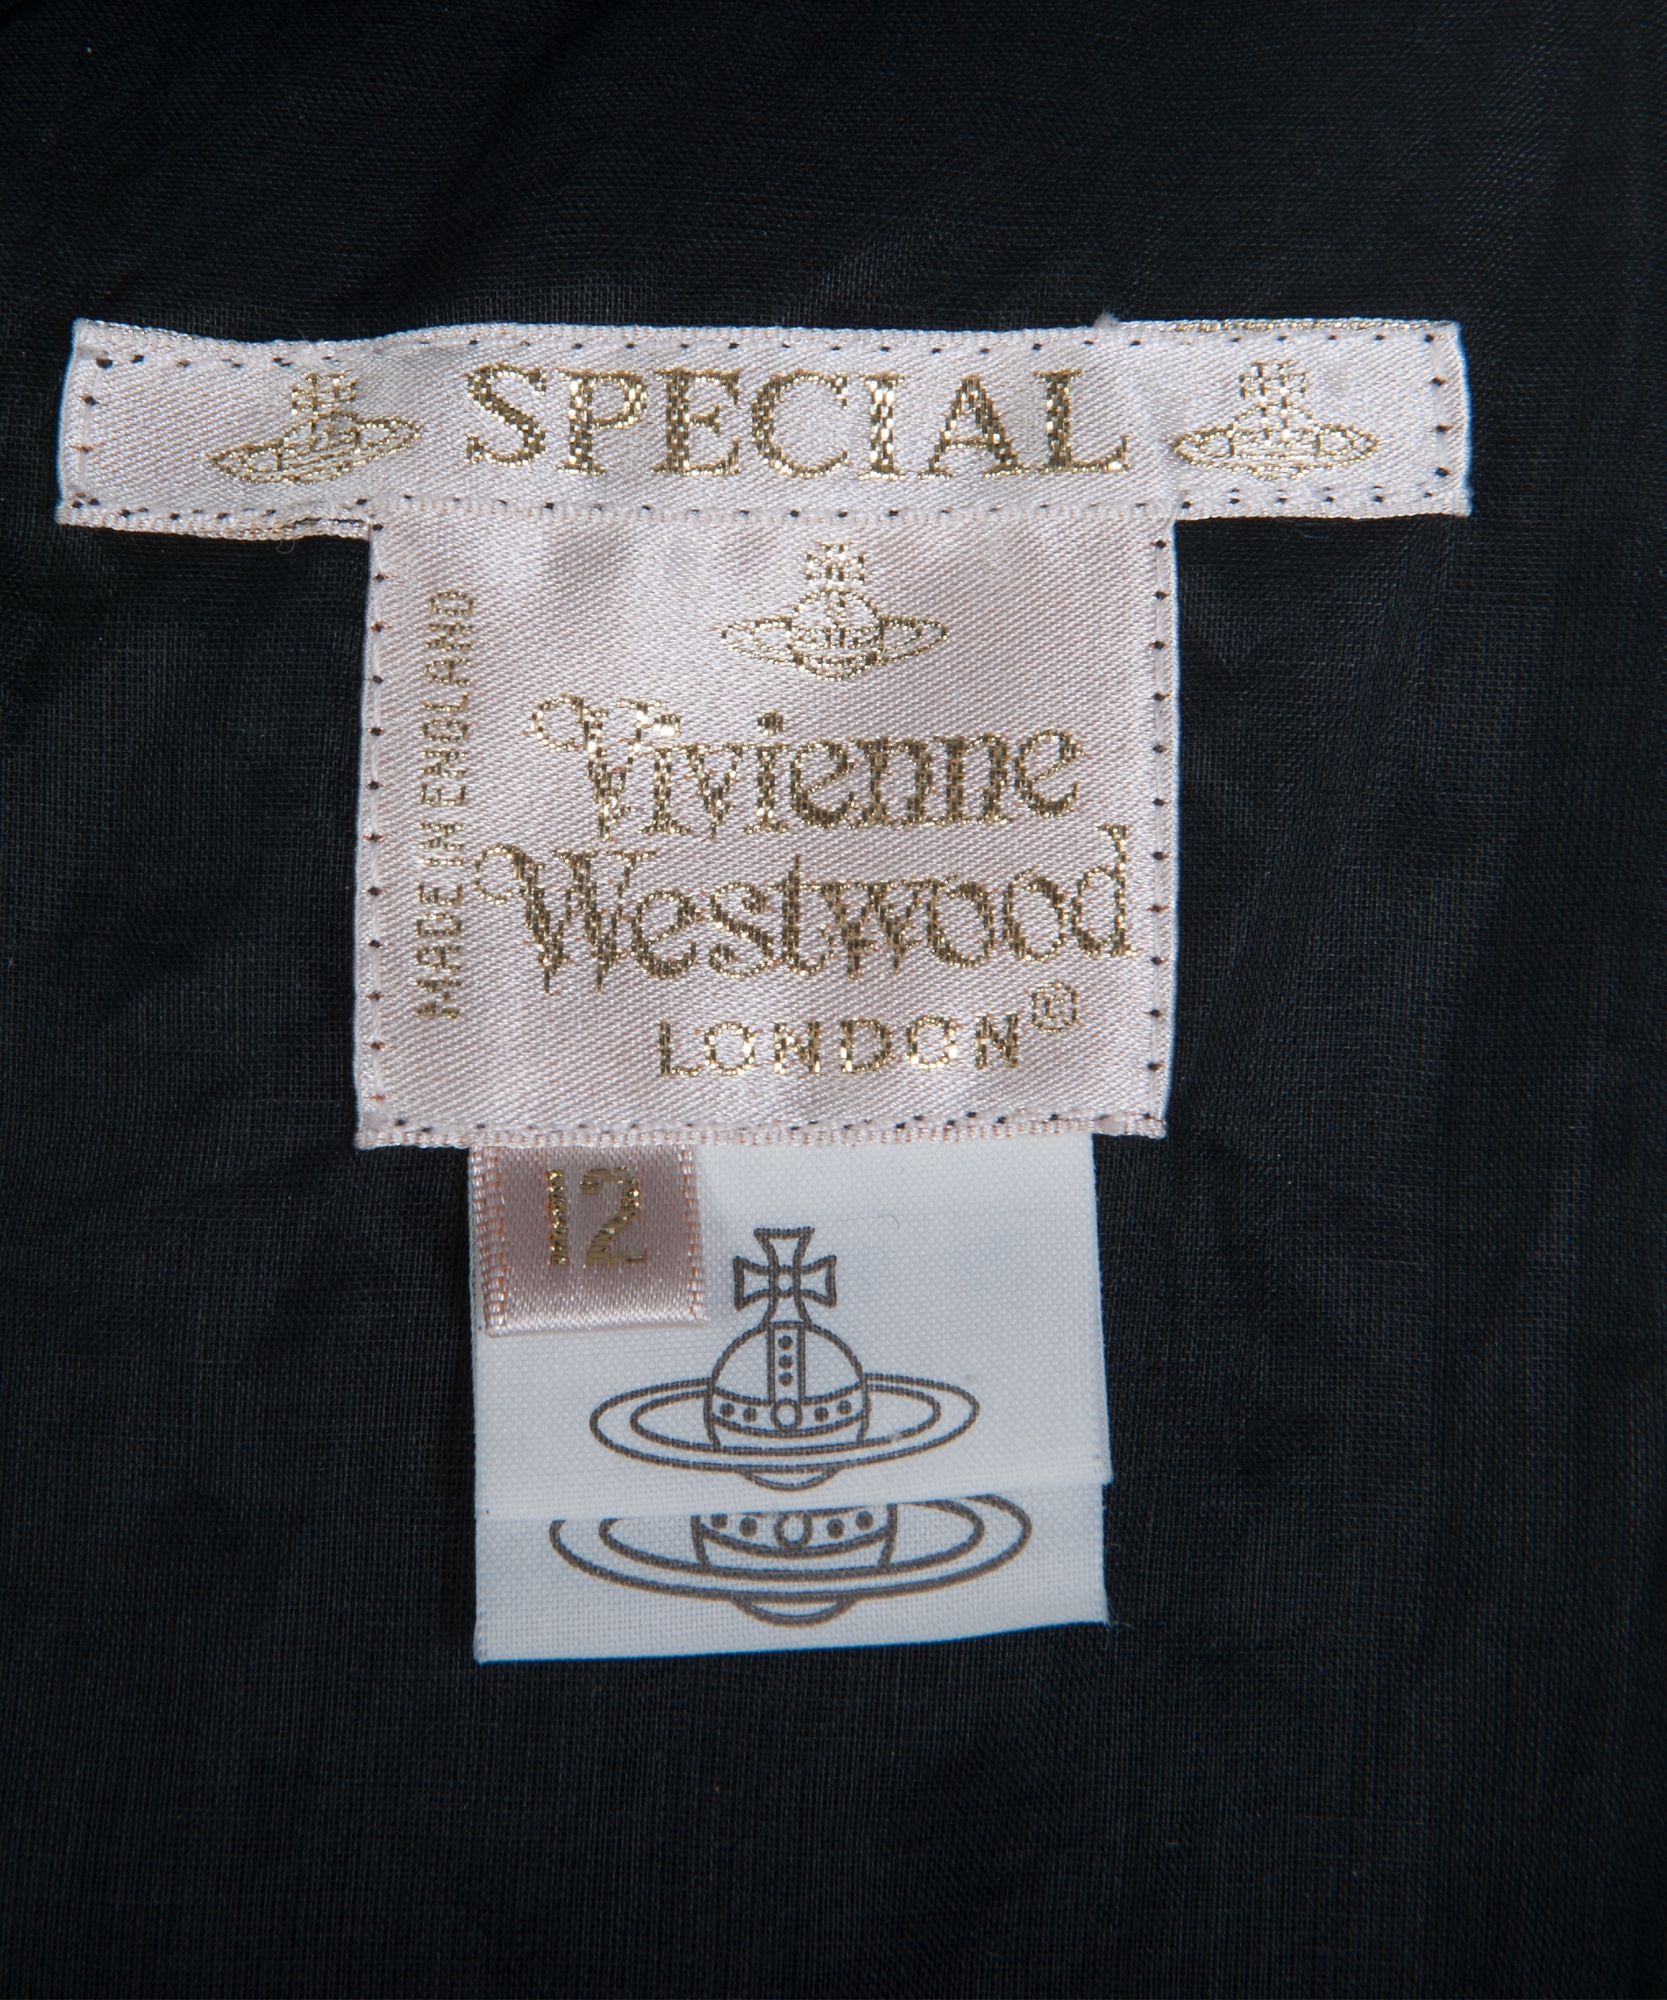 Vivienne Westwood Gold Label Special Black Silk Evening Gown - Vivienne ...